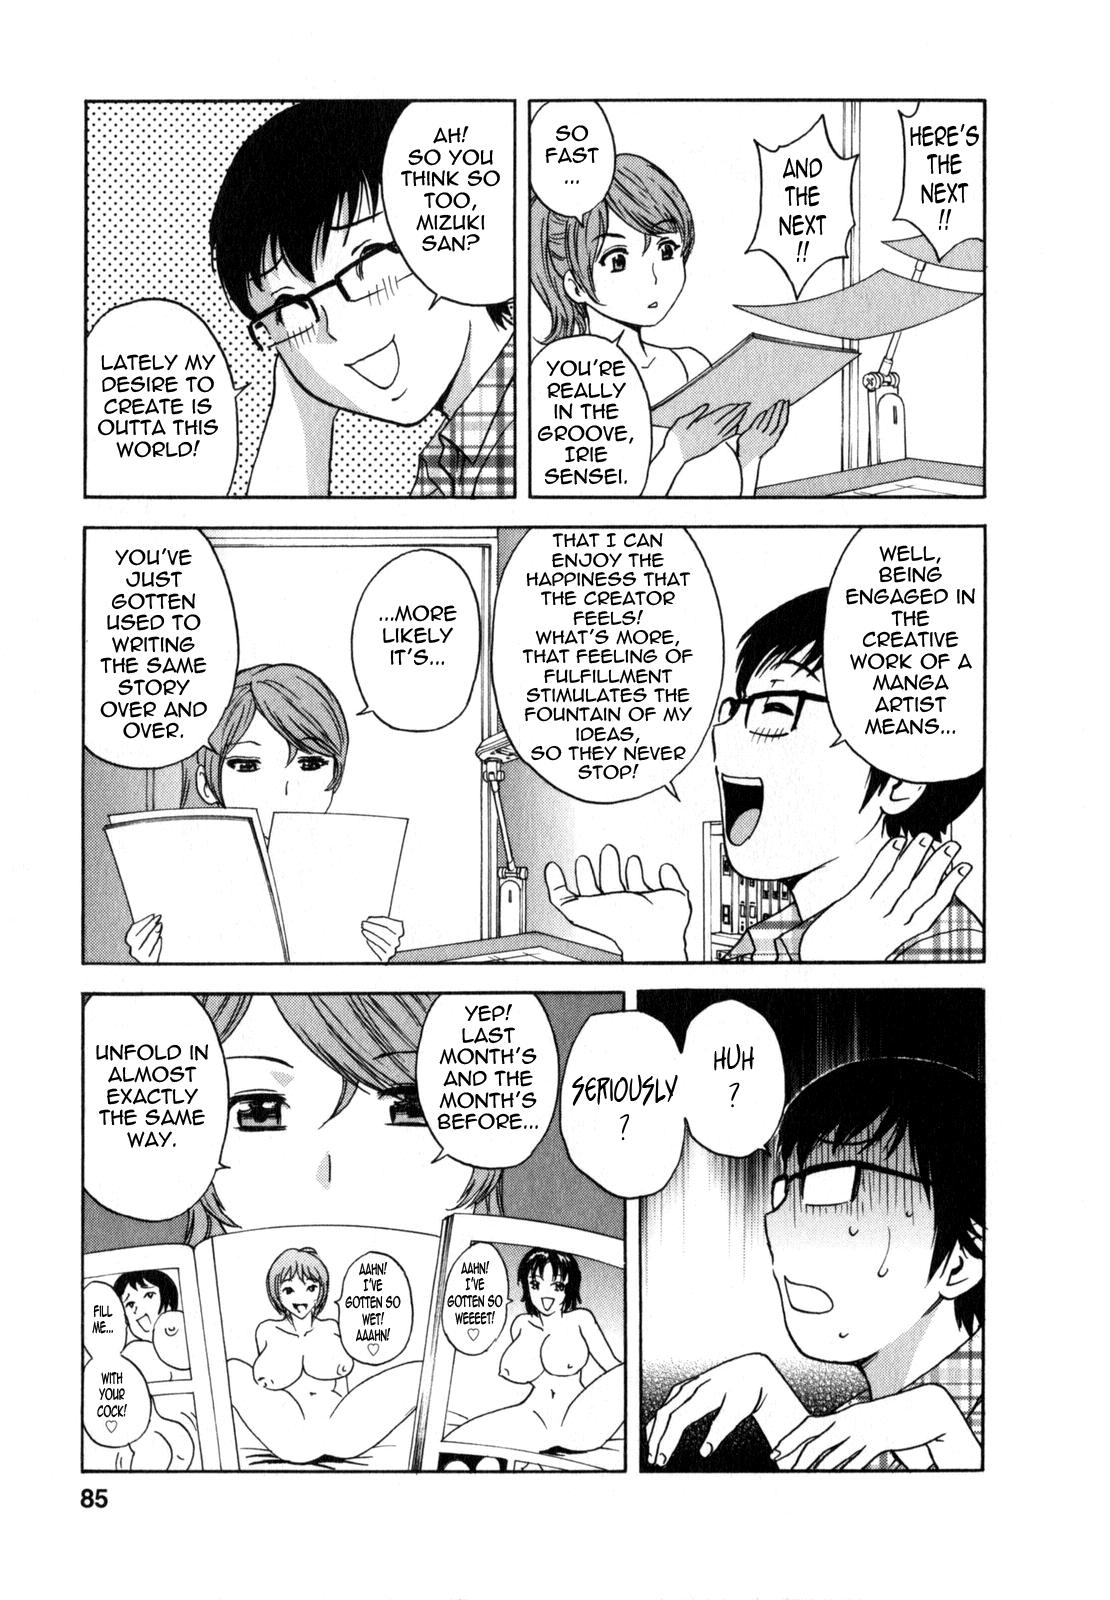 [Hidemaru] Life with Married Women Just Like a Manga 2 - Ch. 1-5 [English] {Tadanohito} 88